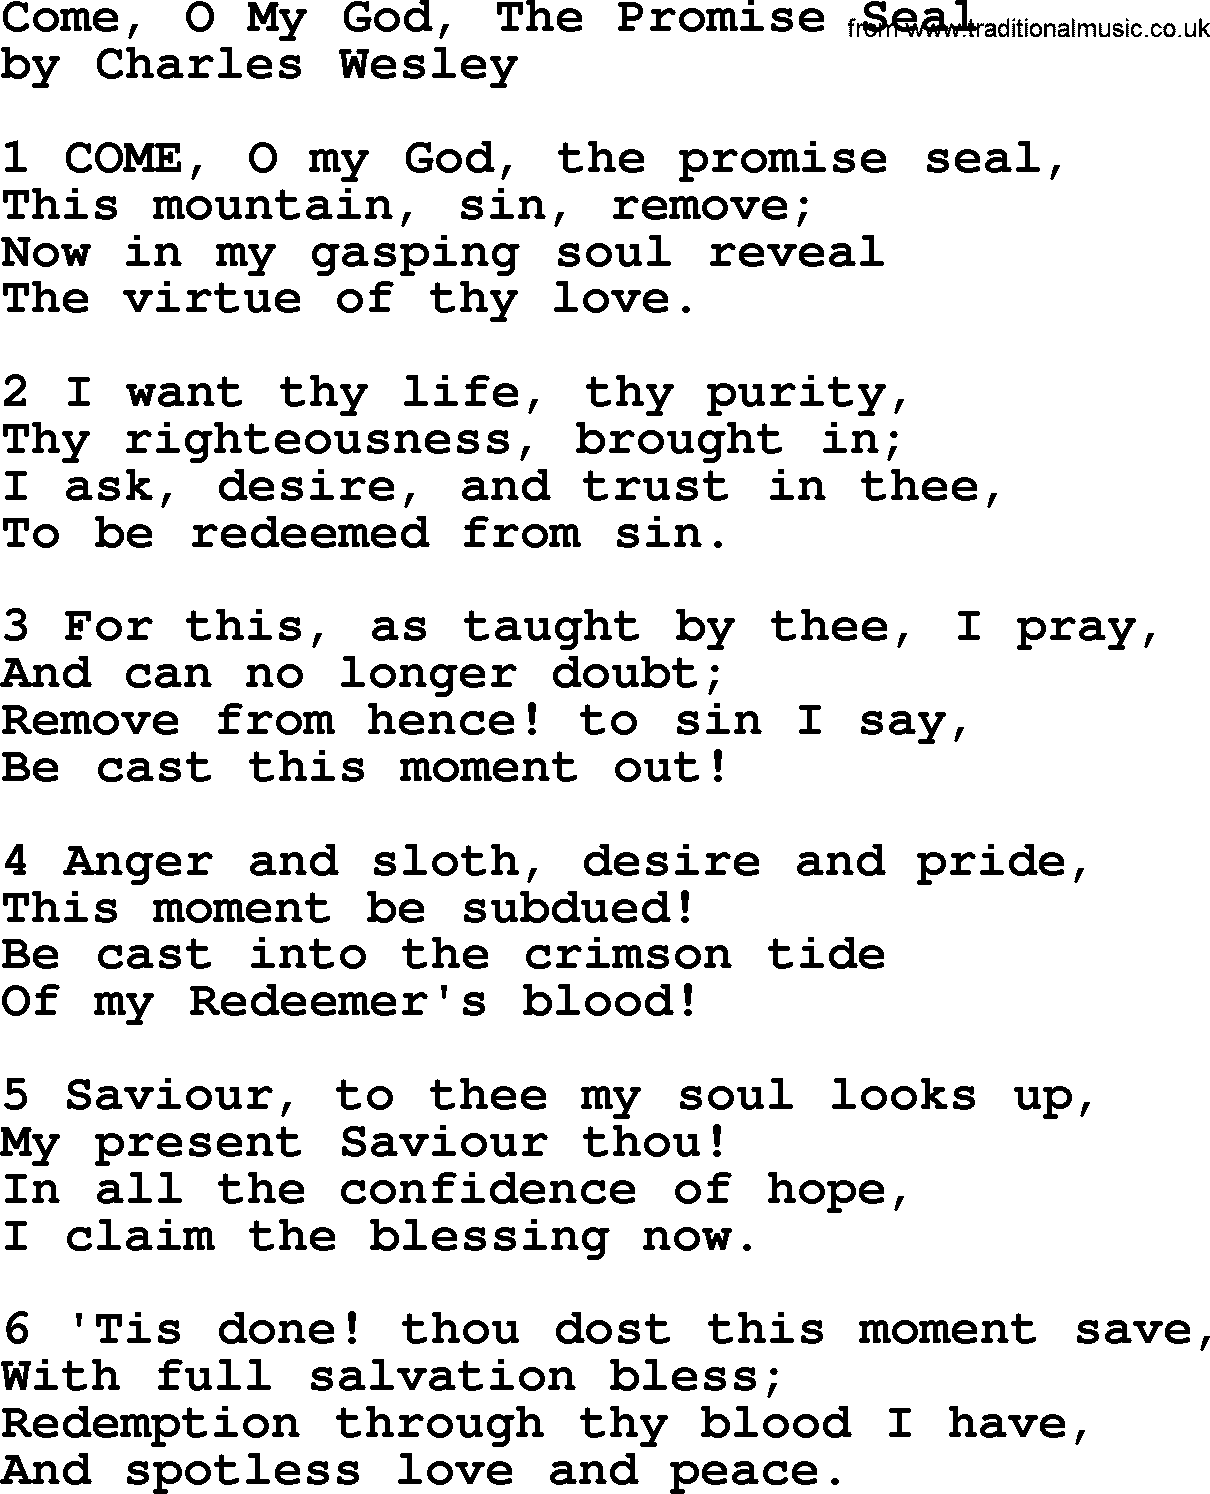 Charles Wesley hymn: Come, O My God, The Promise Seal, lyrics